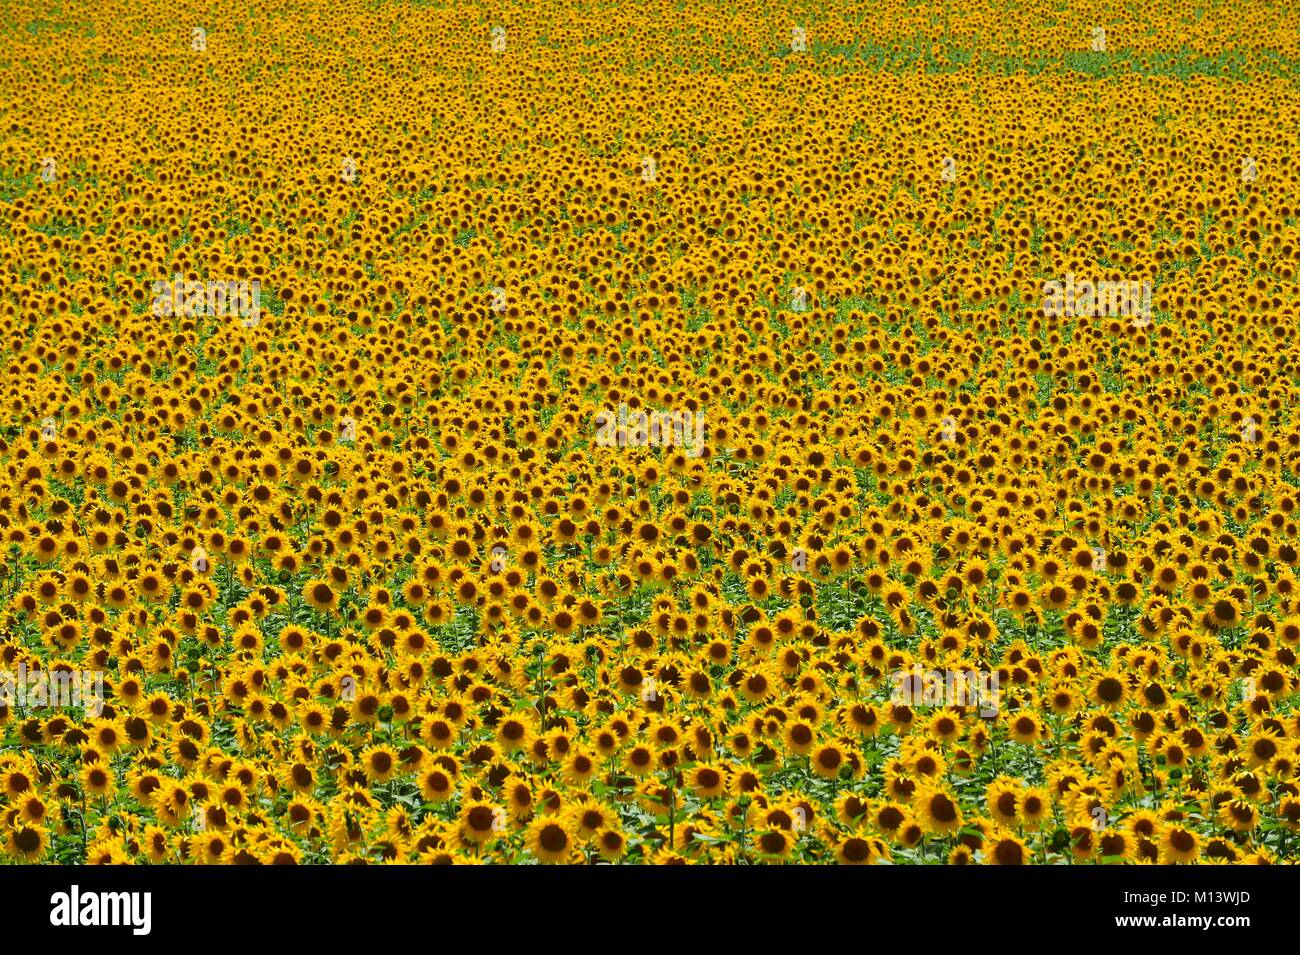 Spain, Andalusia, Jerez de la Frontera, sunflower fields Stock Photo